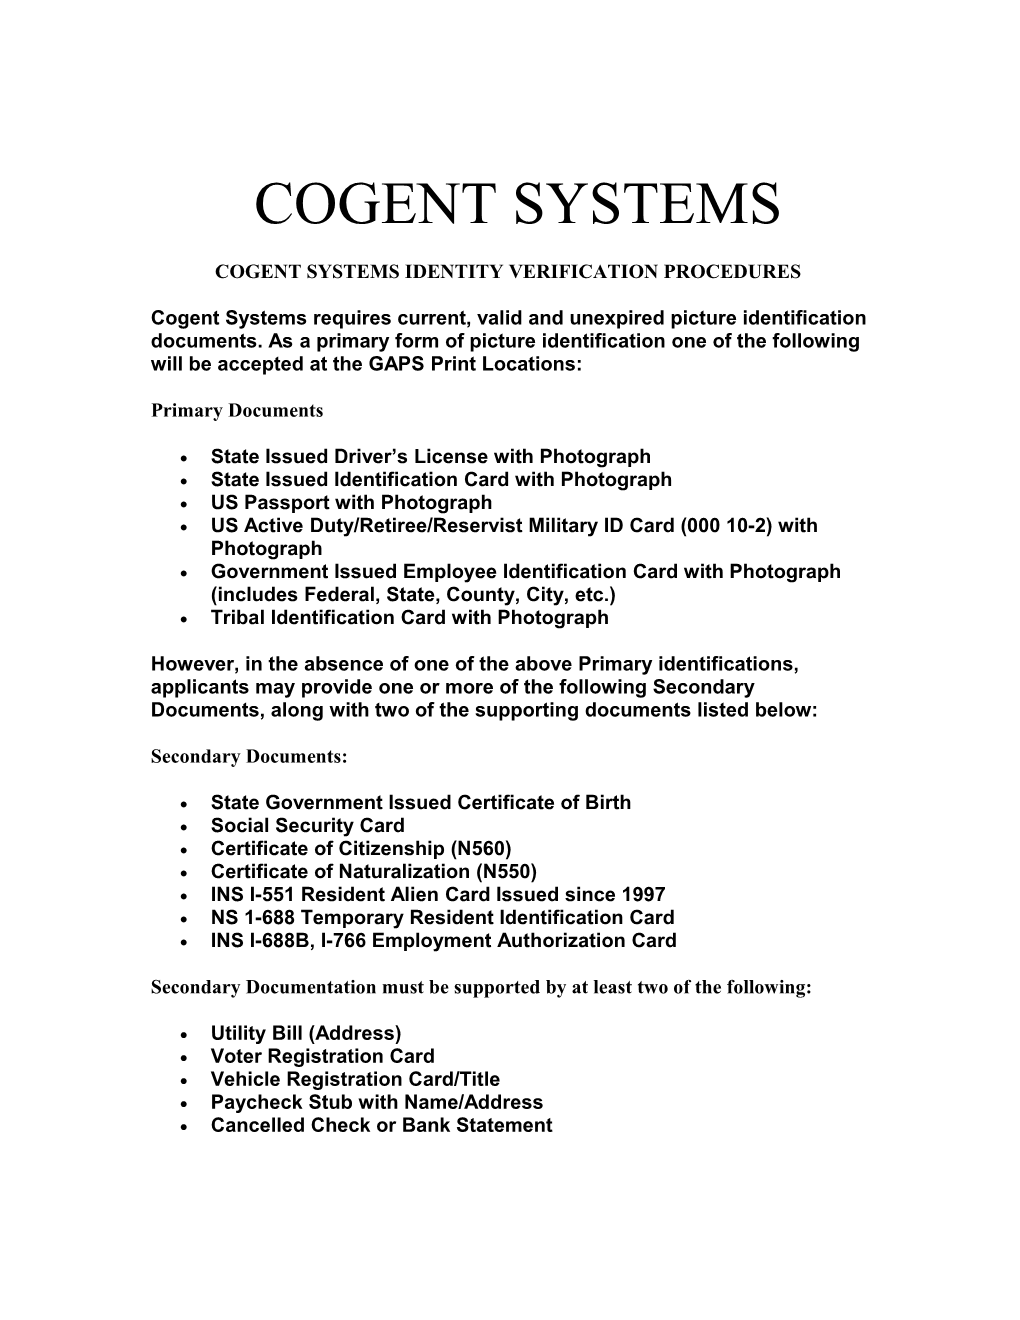 Cogent Systems Identity Verification Procedures